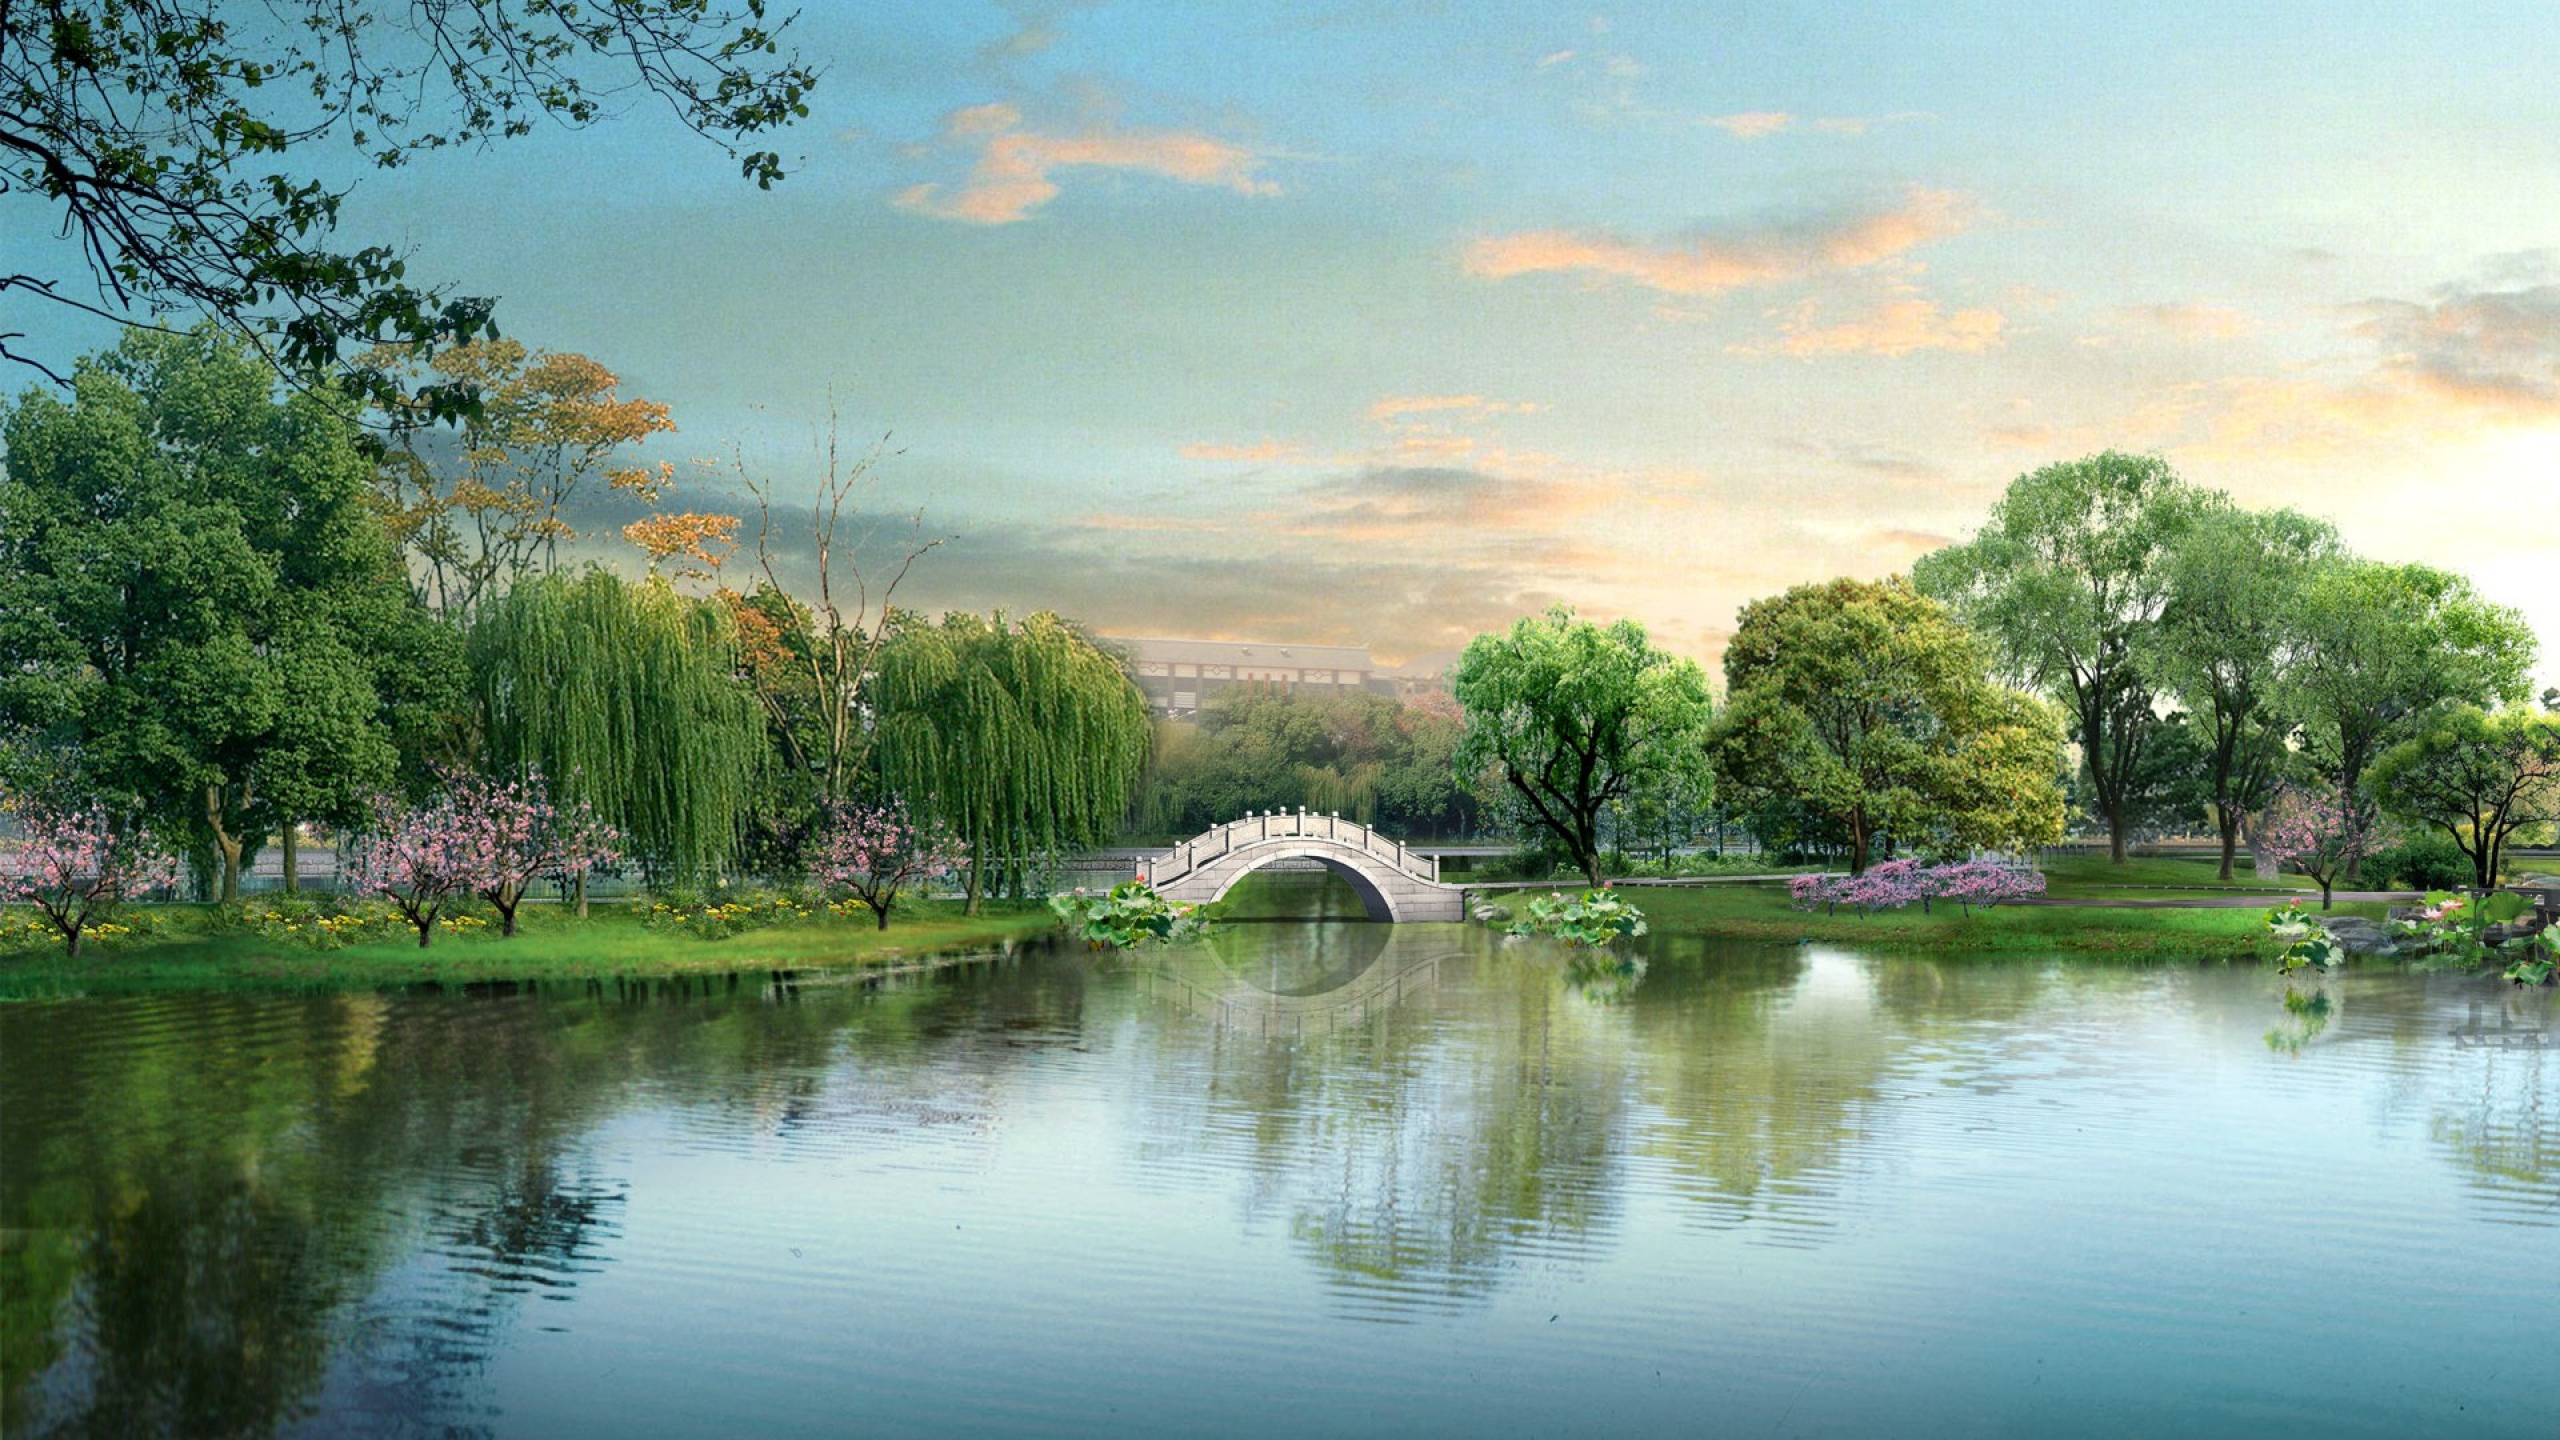 White Bridge Over River During Daytime. Wallpaper in 2560x1440 Resolution